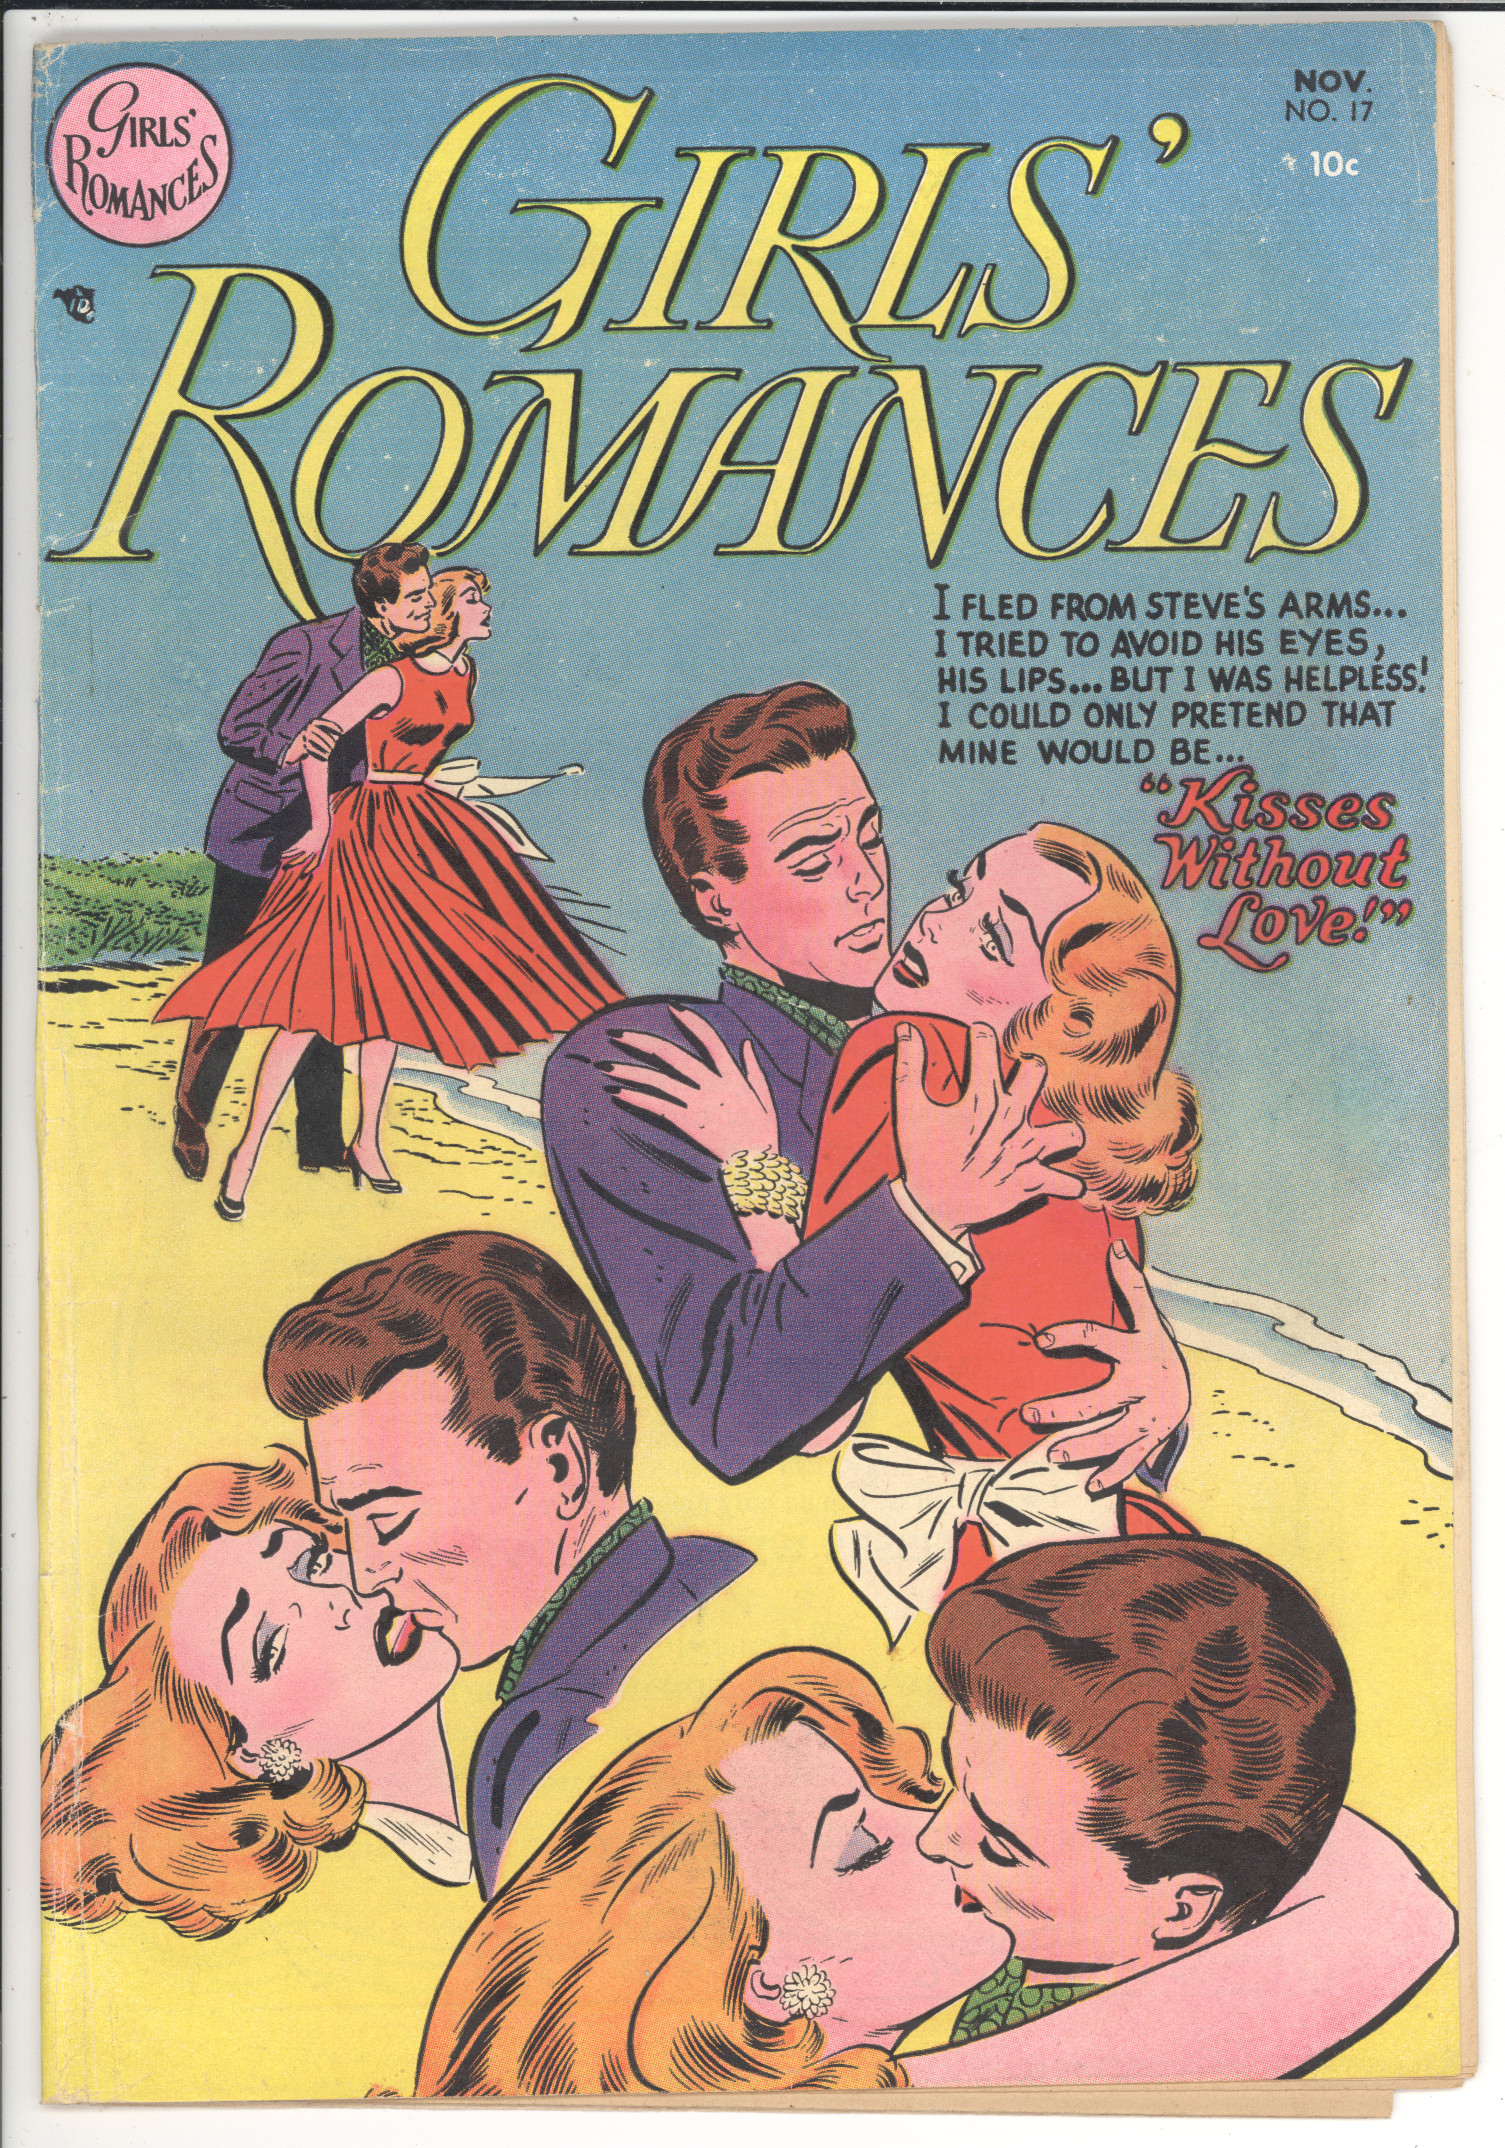 Girls' Romances #17 front